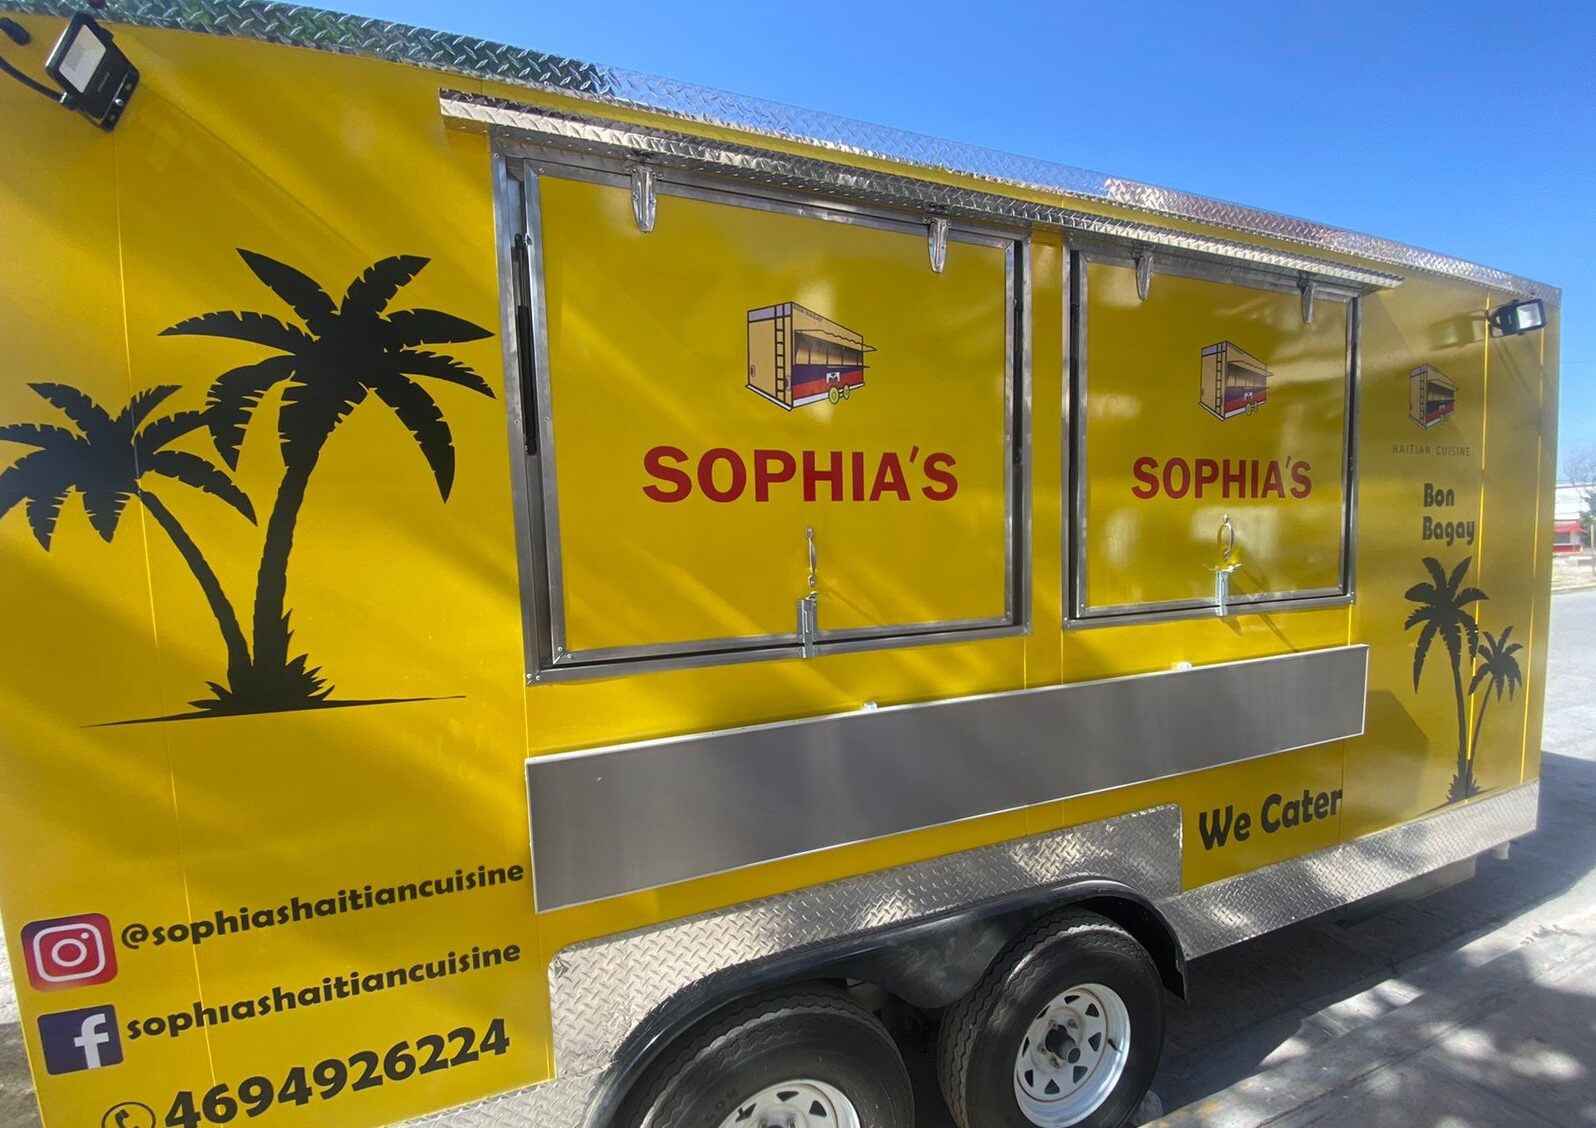 Sophia’s Haitian Cuisine